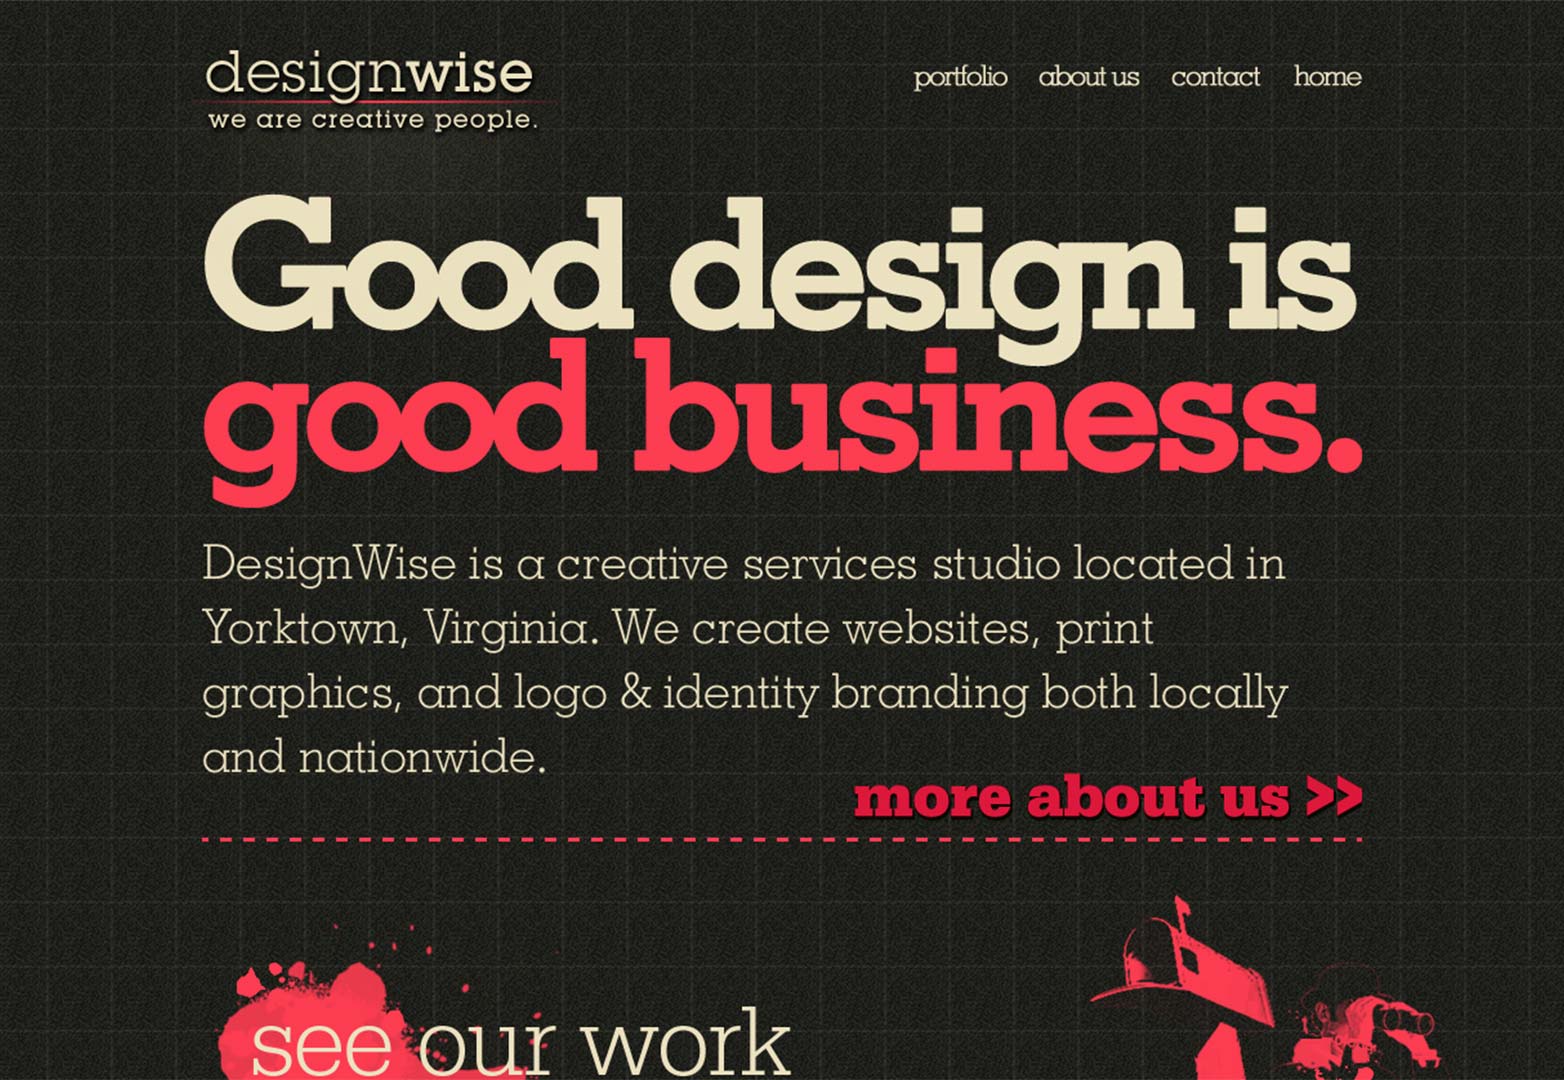 DesignWise